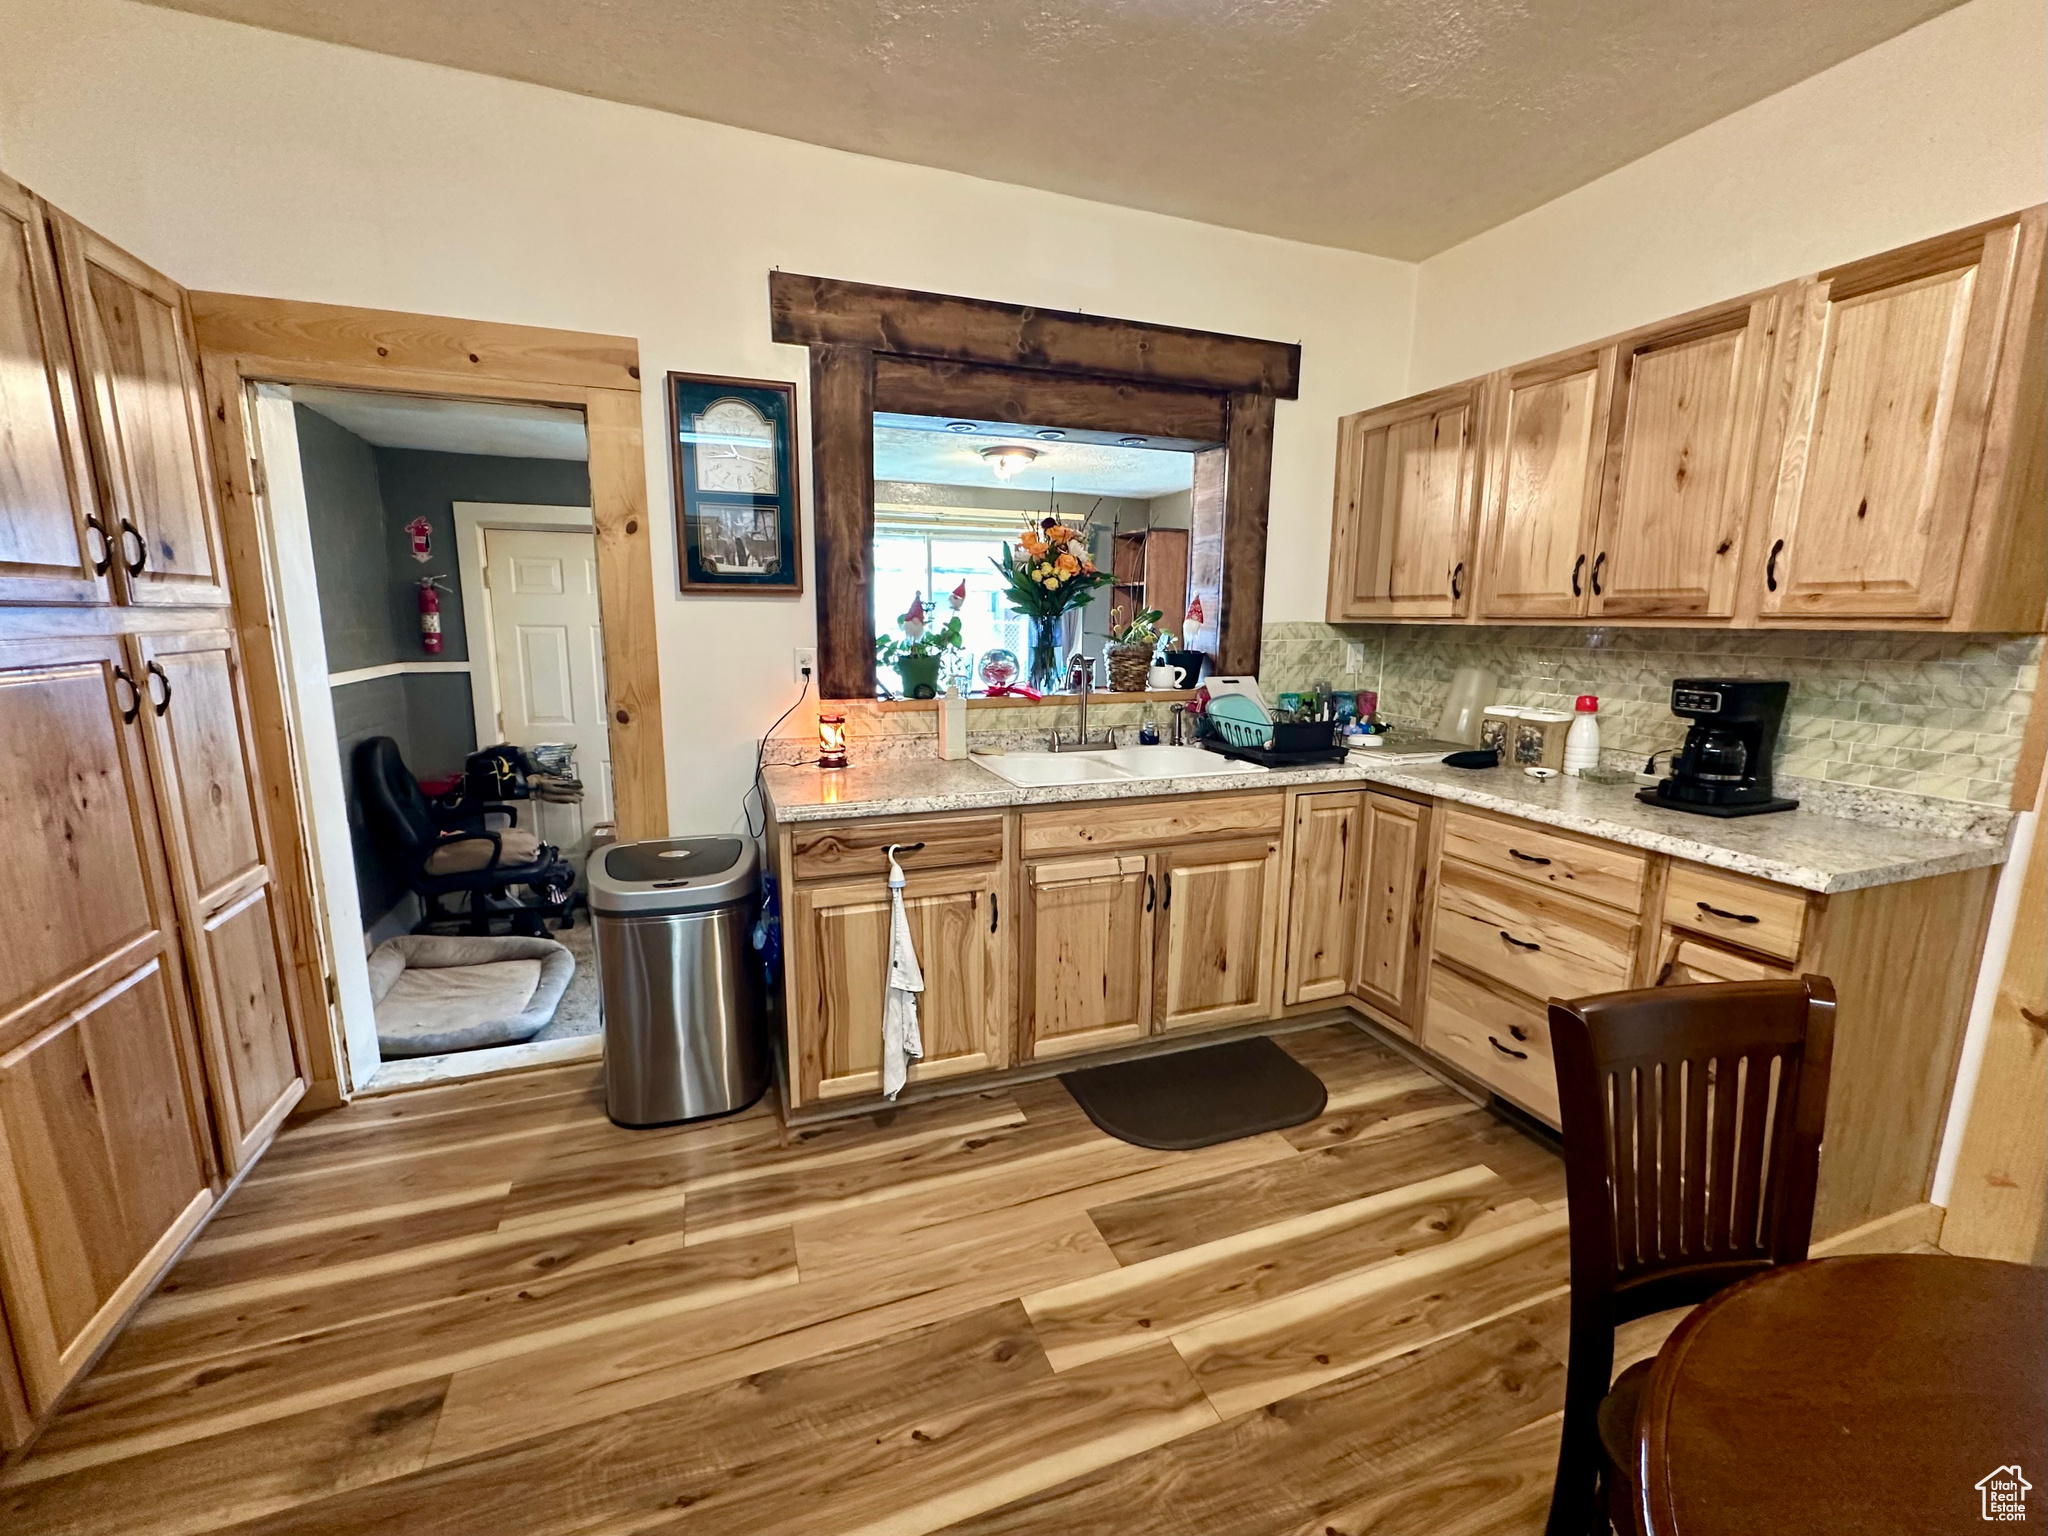 Kitchen with backsplash, light stone counters, sink, and hardwood / wood-style floors